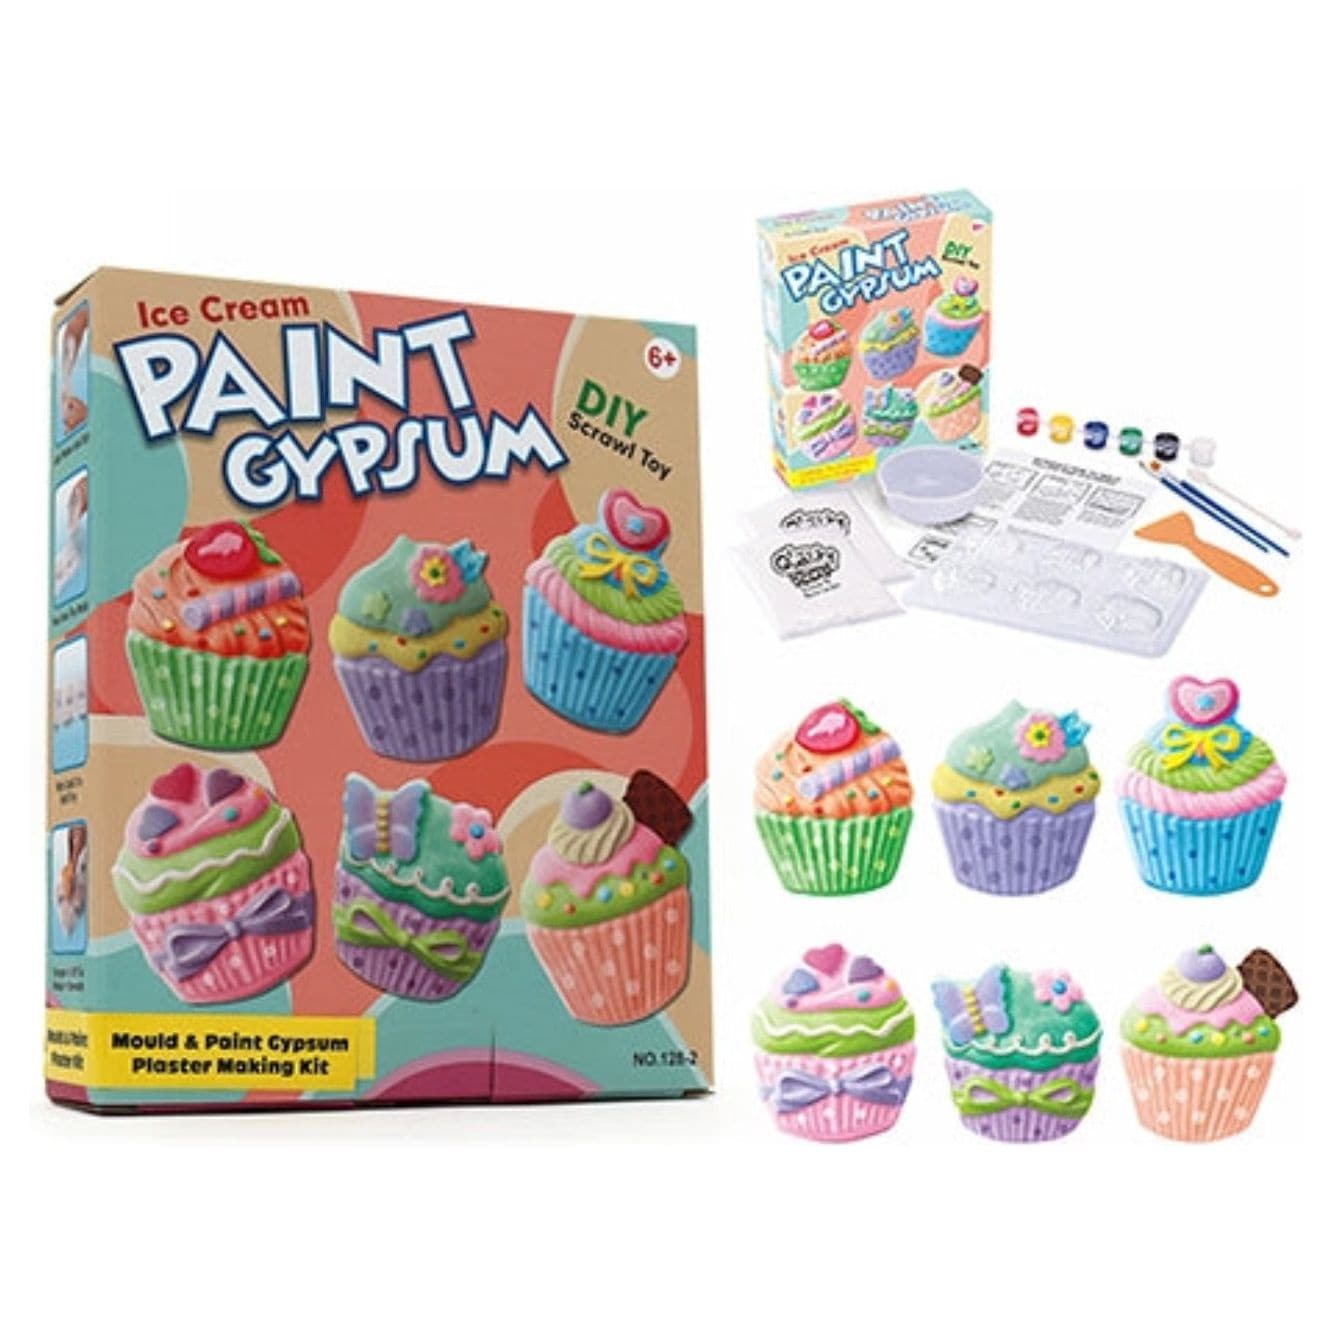 Mould & Paint Gypsum Plaster Kit - Cupcakes - Sensory Circle